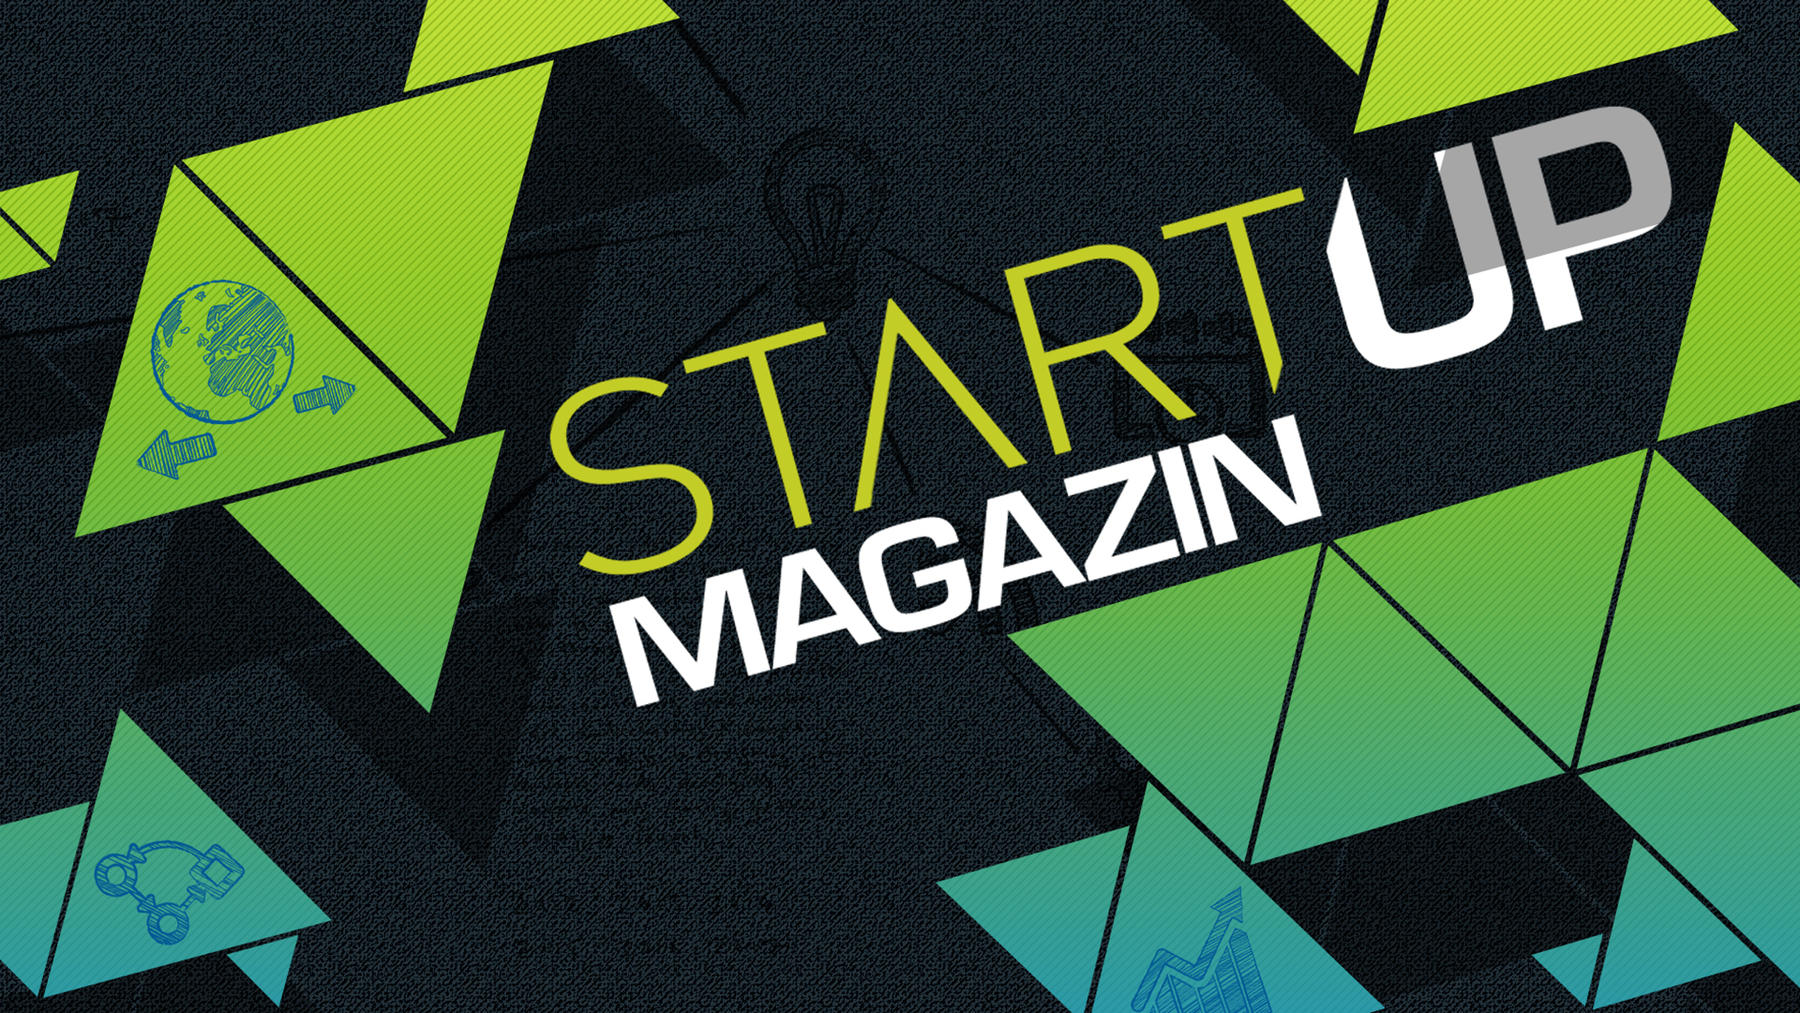 Startup Magazin